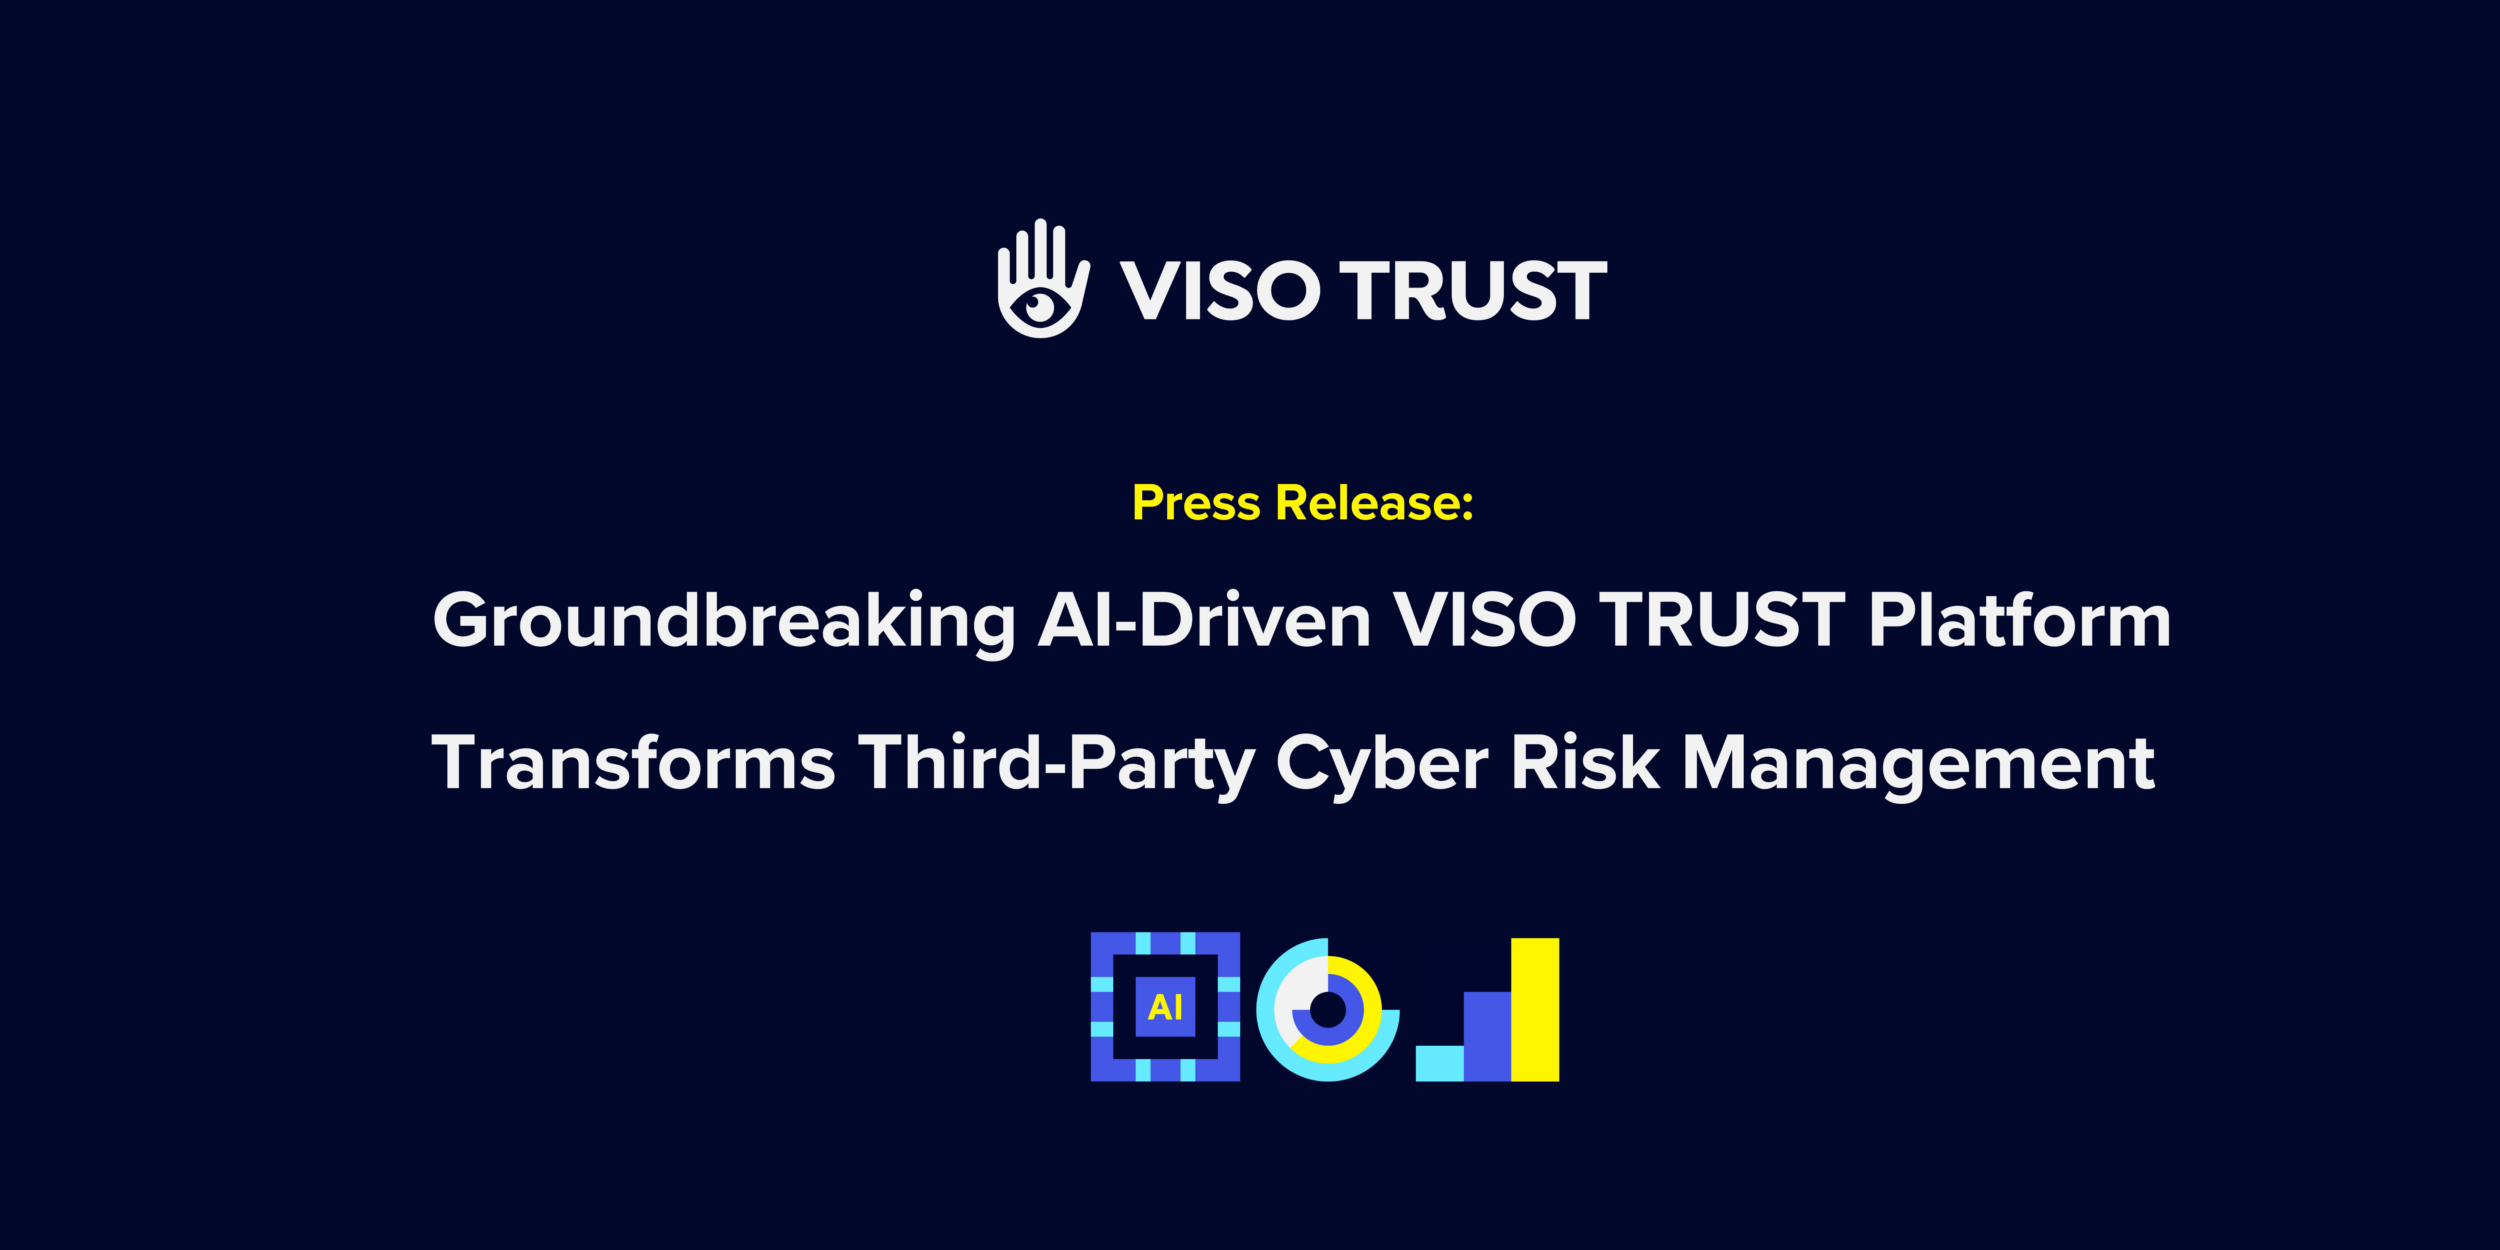 Press Release: AI-Driven Cyber Risk Platform